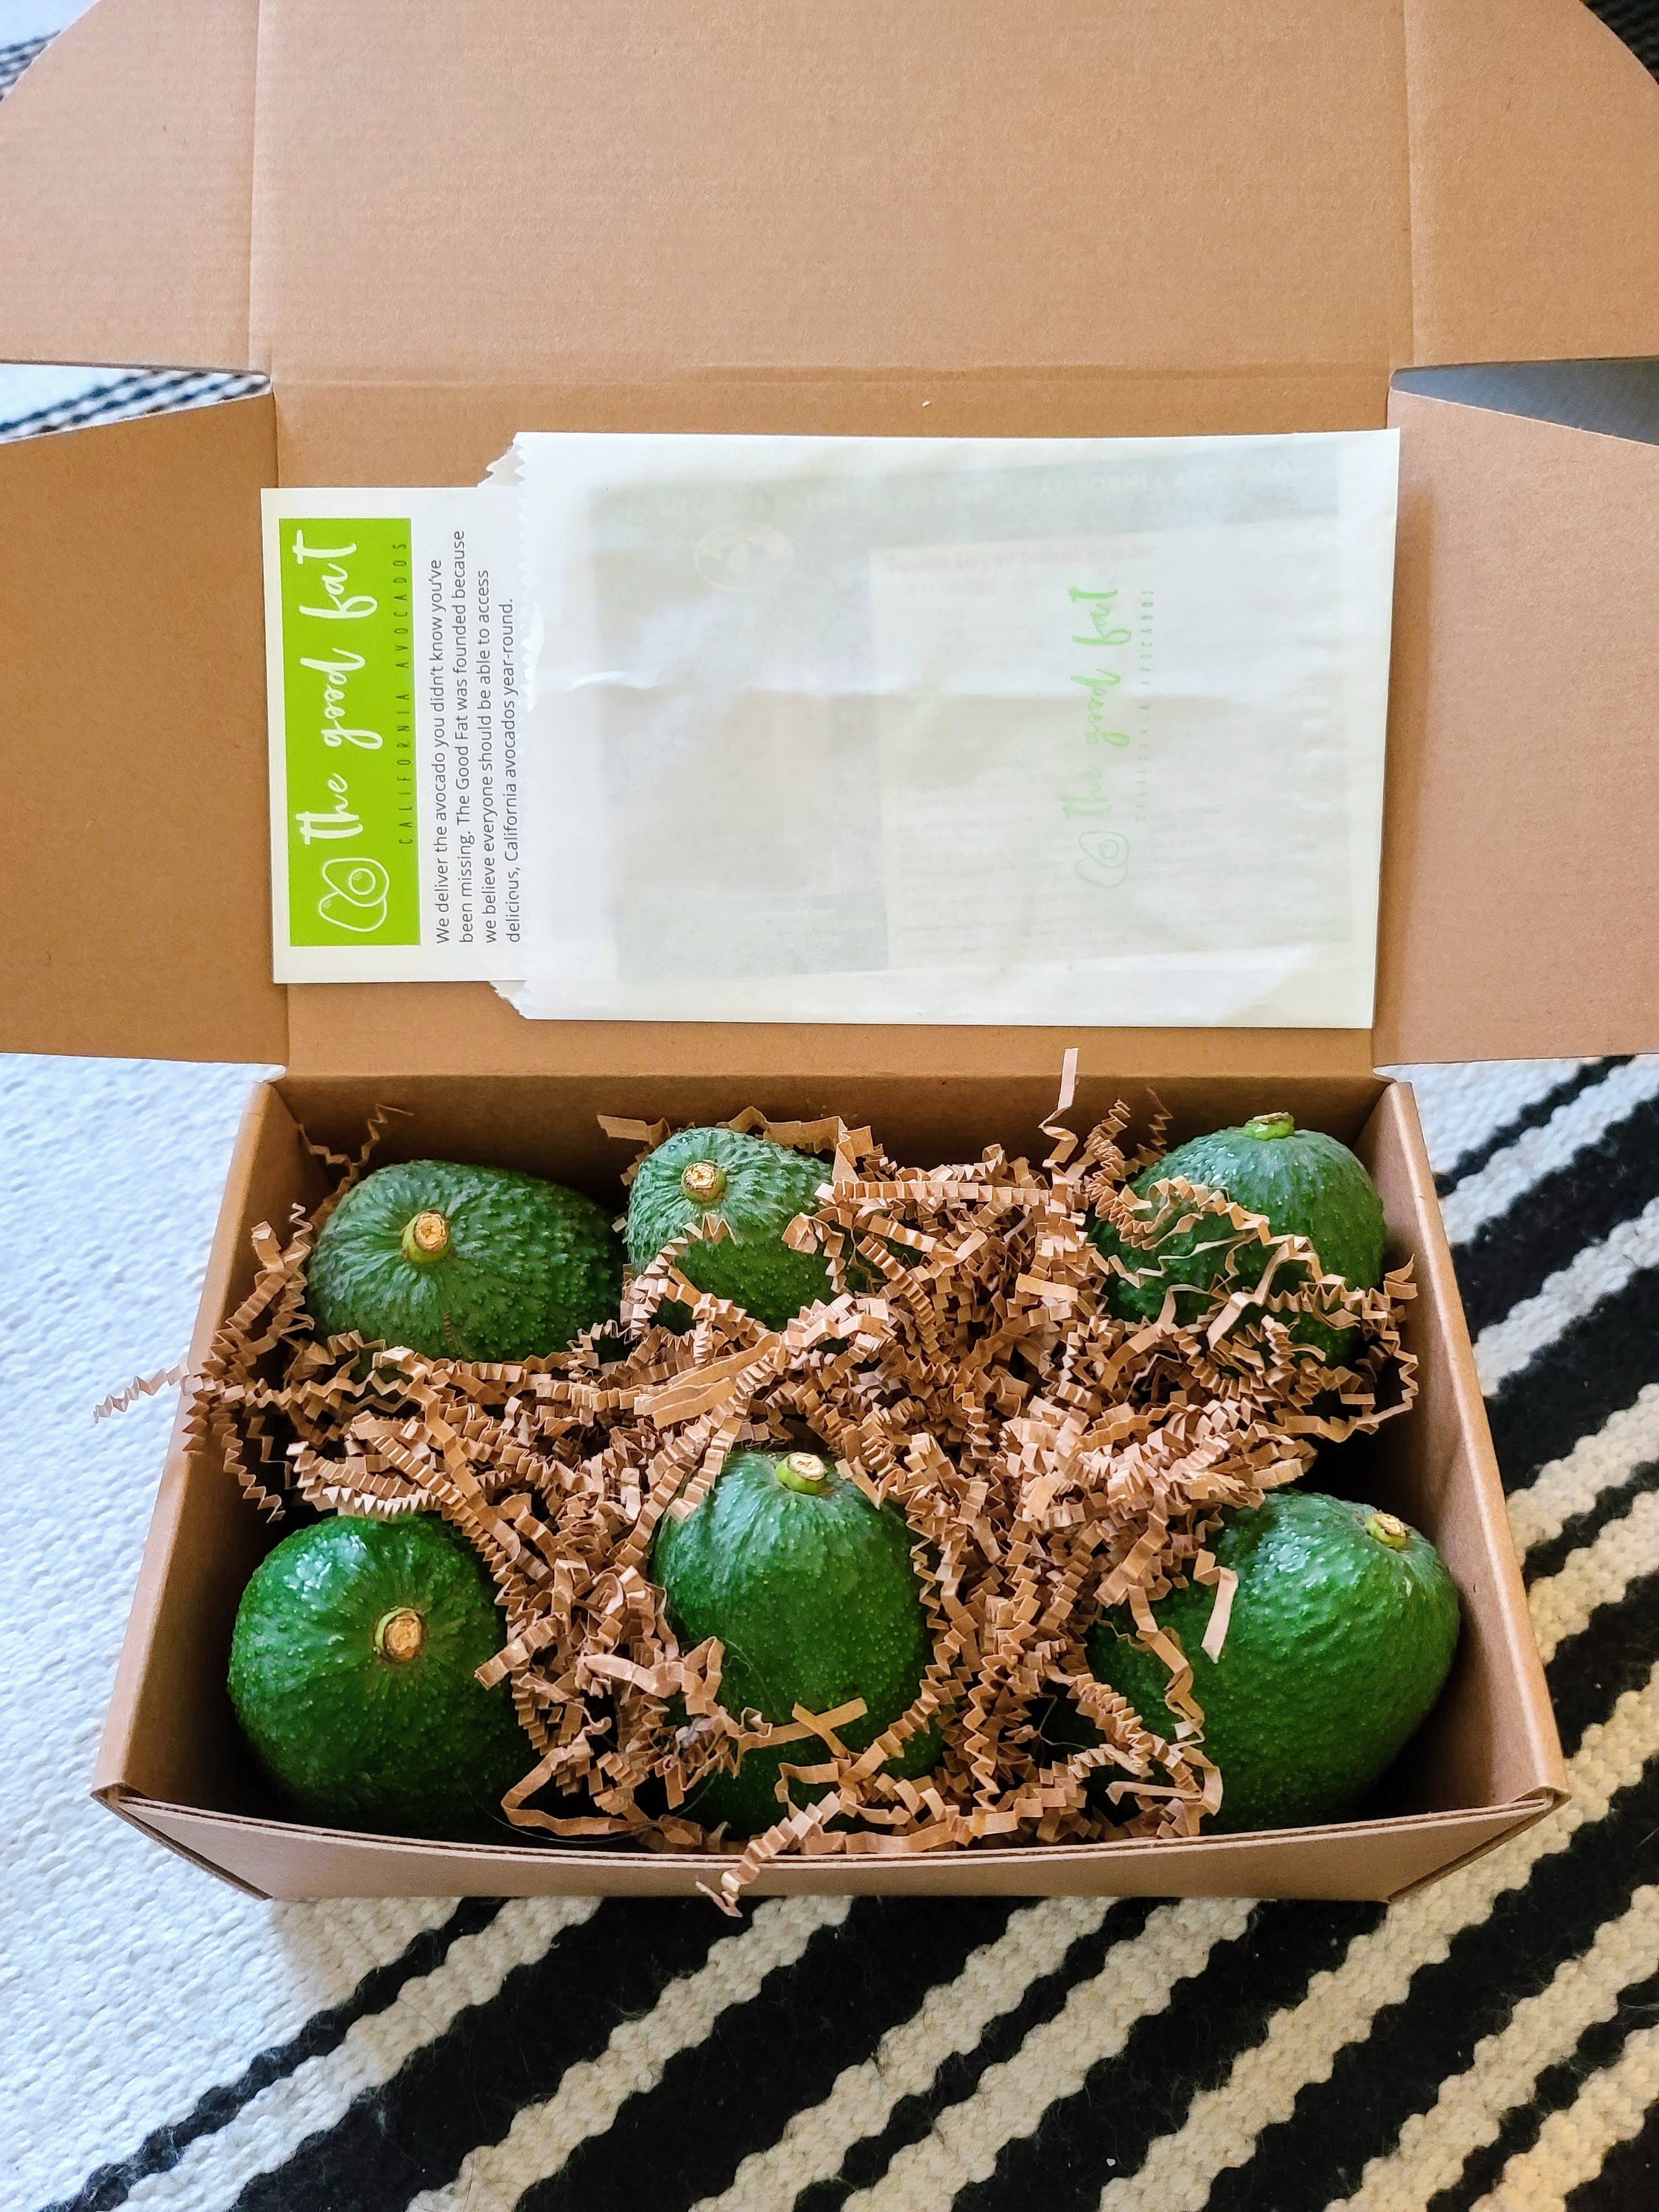 Avocado Box